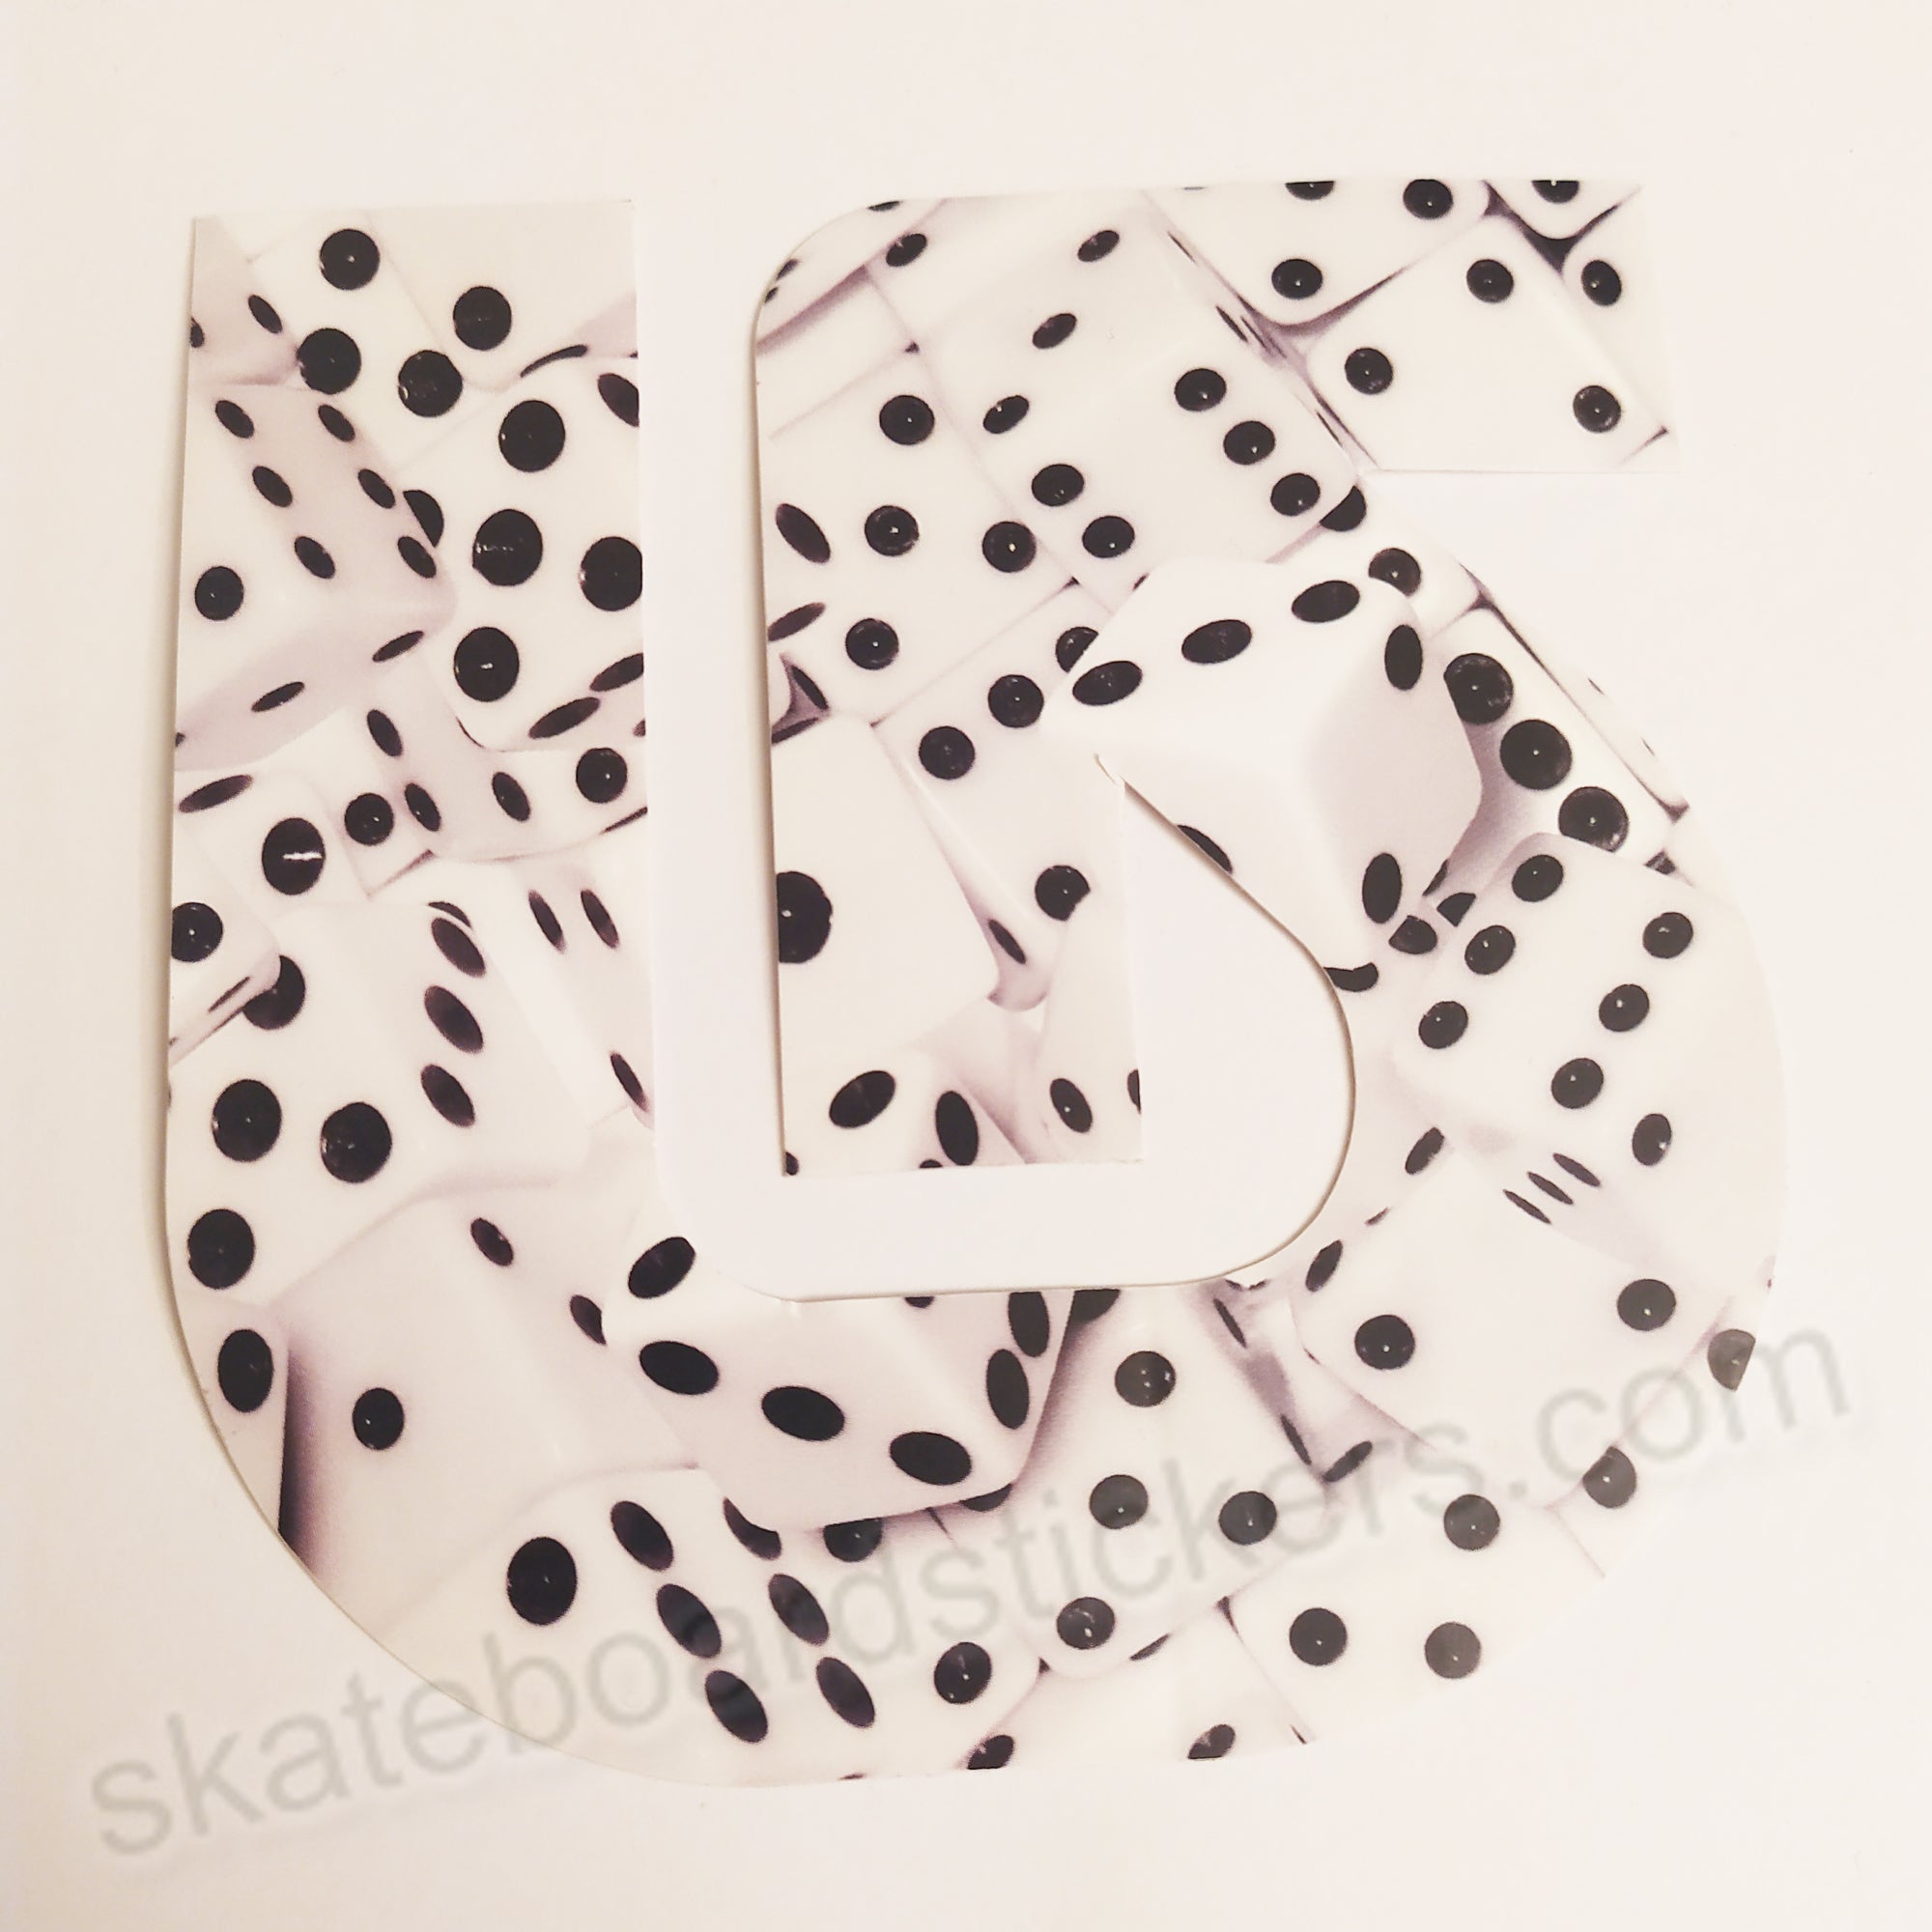 Burton Snowboards Sticker Logo - Dice - SkateboardStickers.com